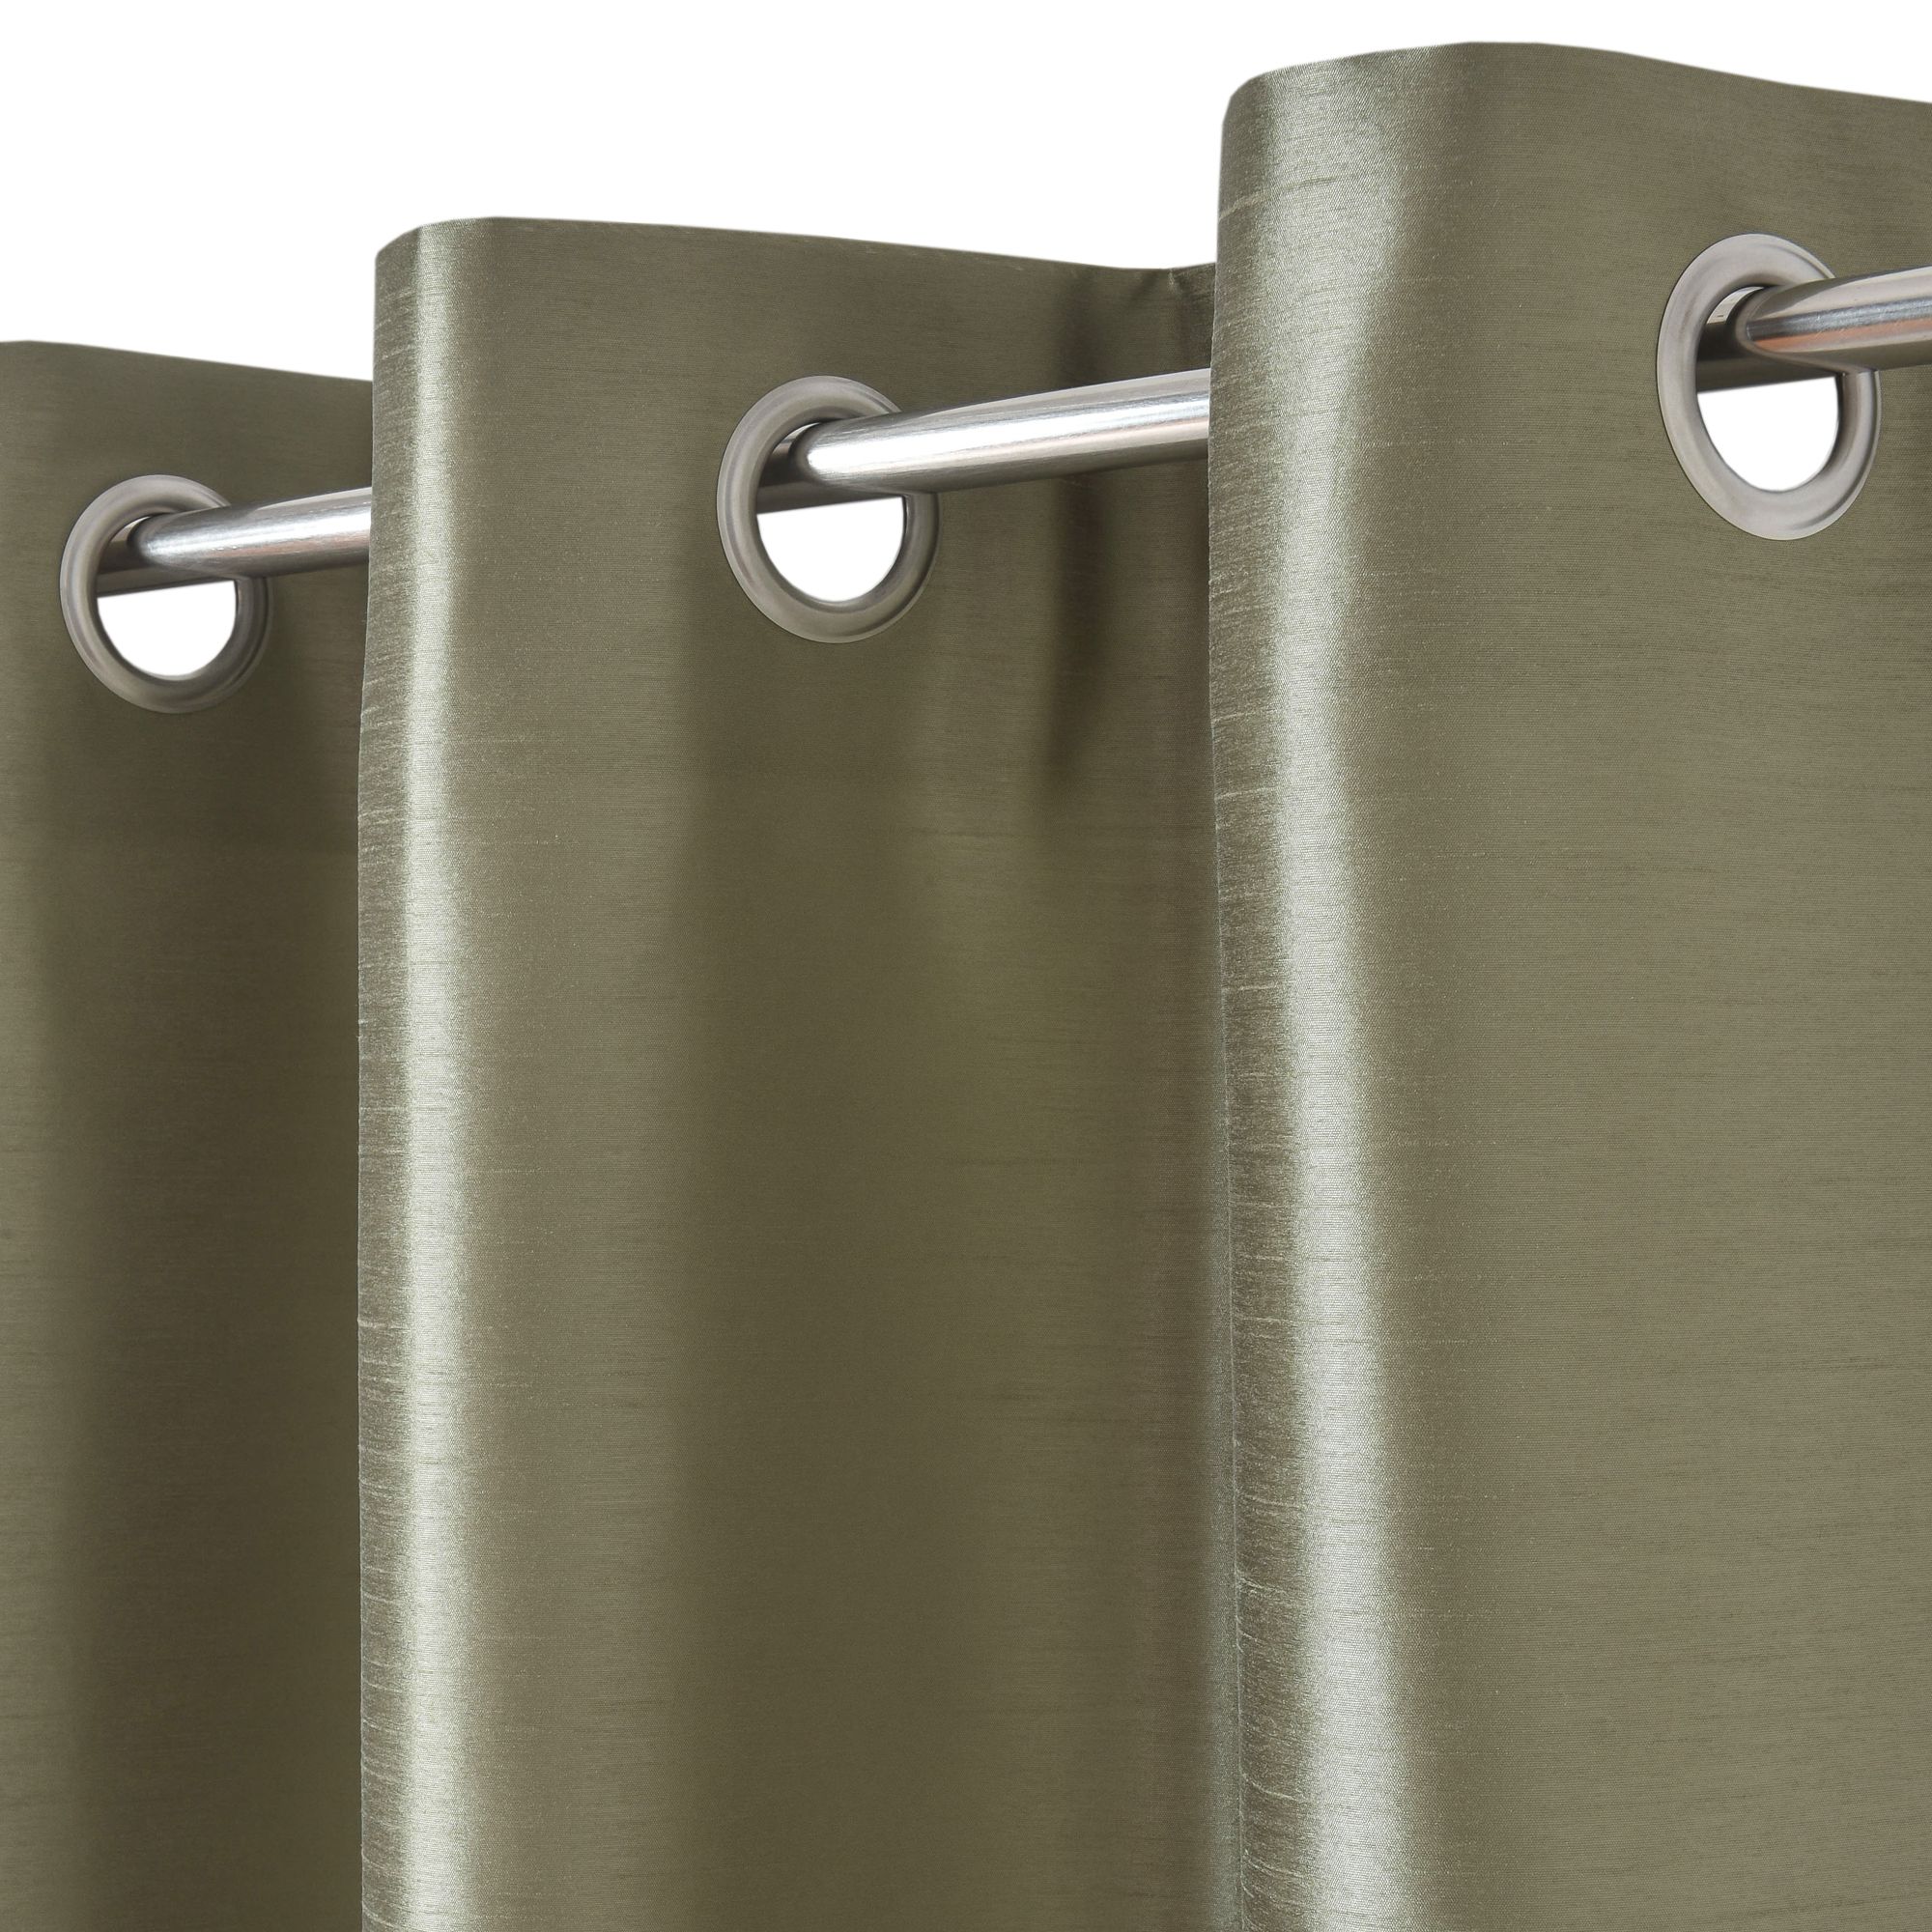 Morea Light green Plain woven Lined Eyelet Curtain (W)167cm (L)183cm, Pair